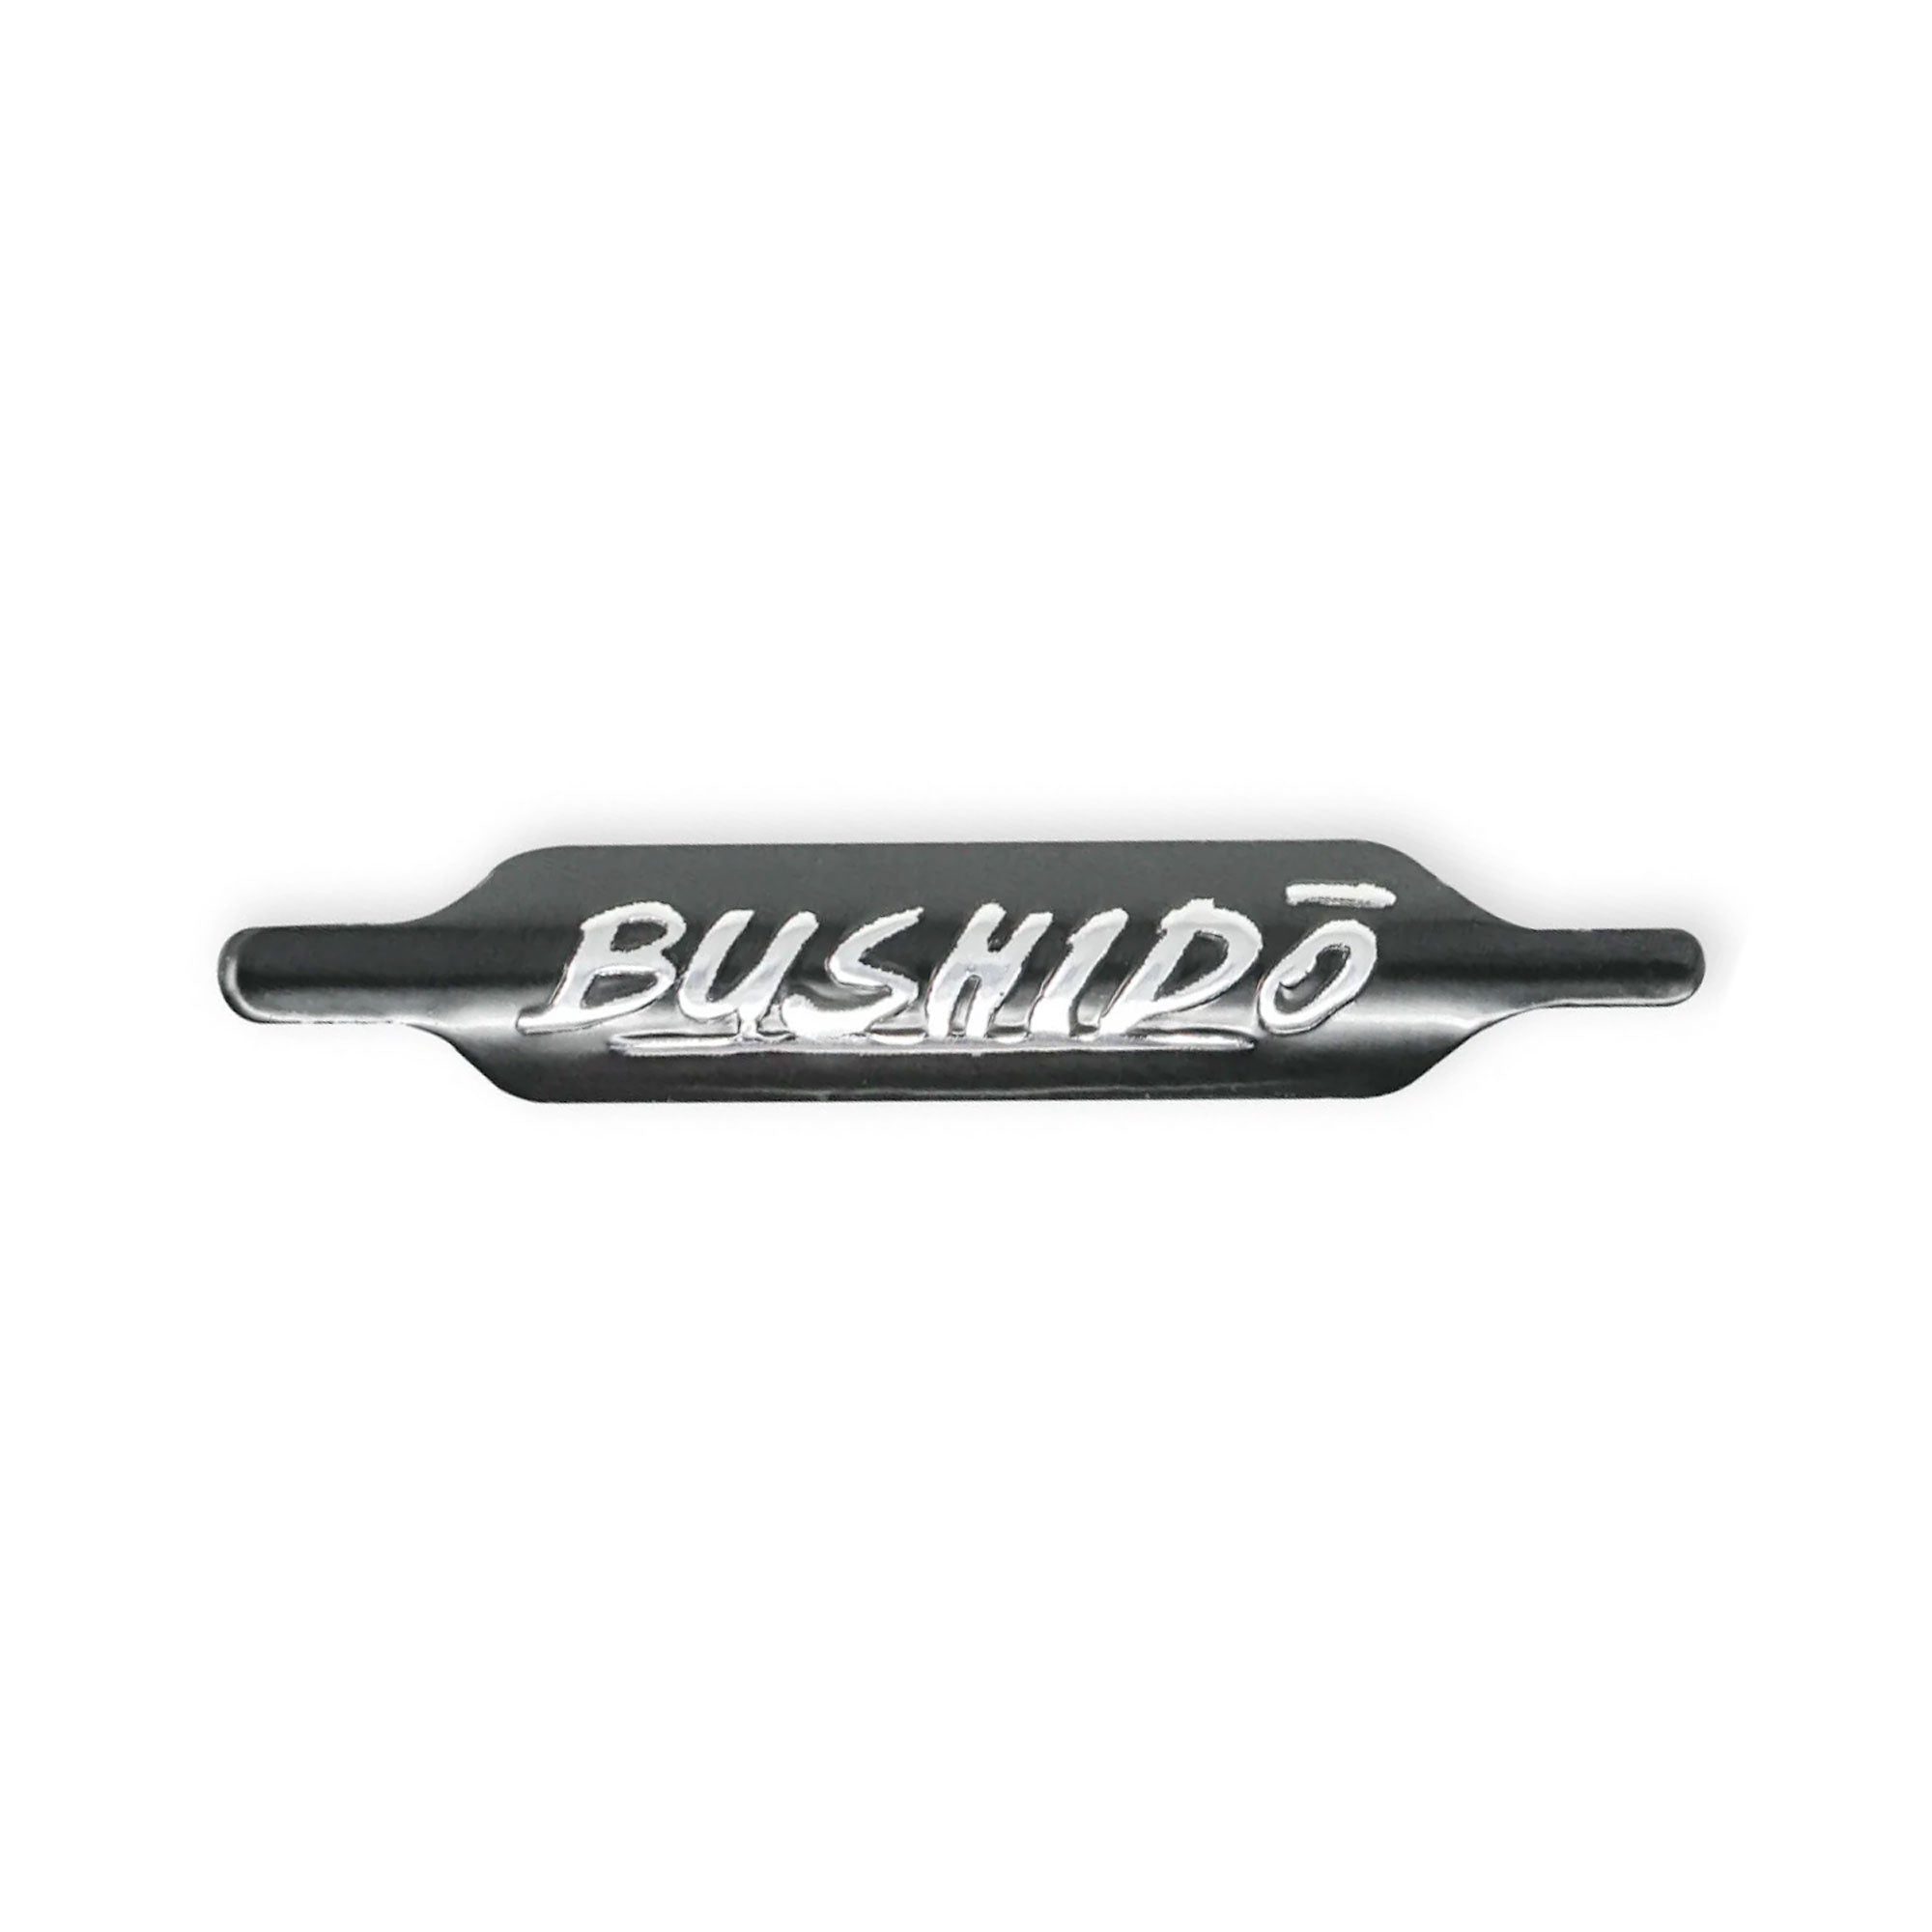 Bushido Name Plate